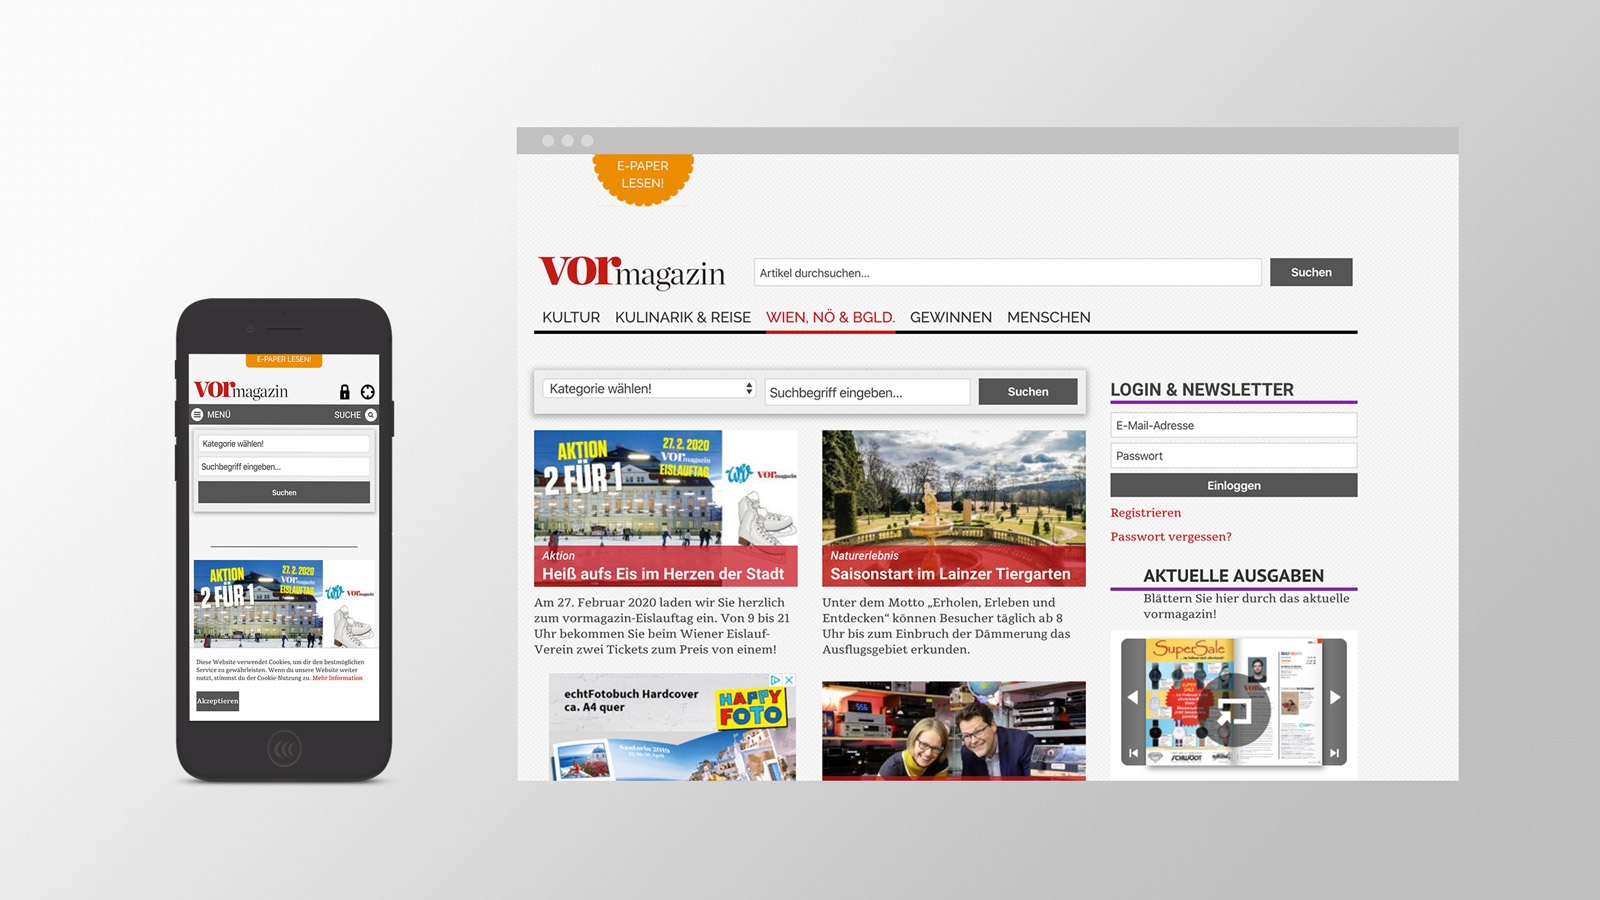 Vormagazin | vormagazin.at | 2014 (Phone Browser) © echonet communication